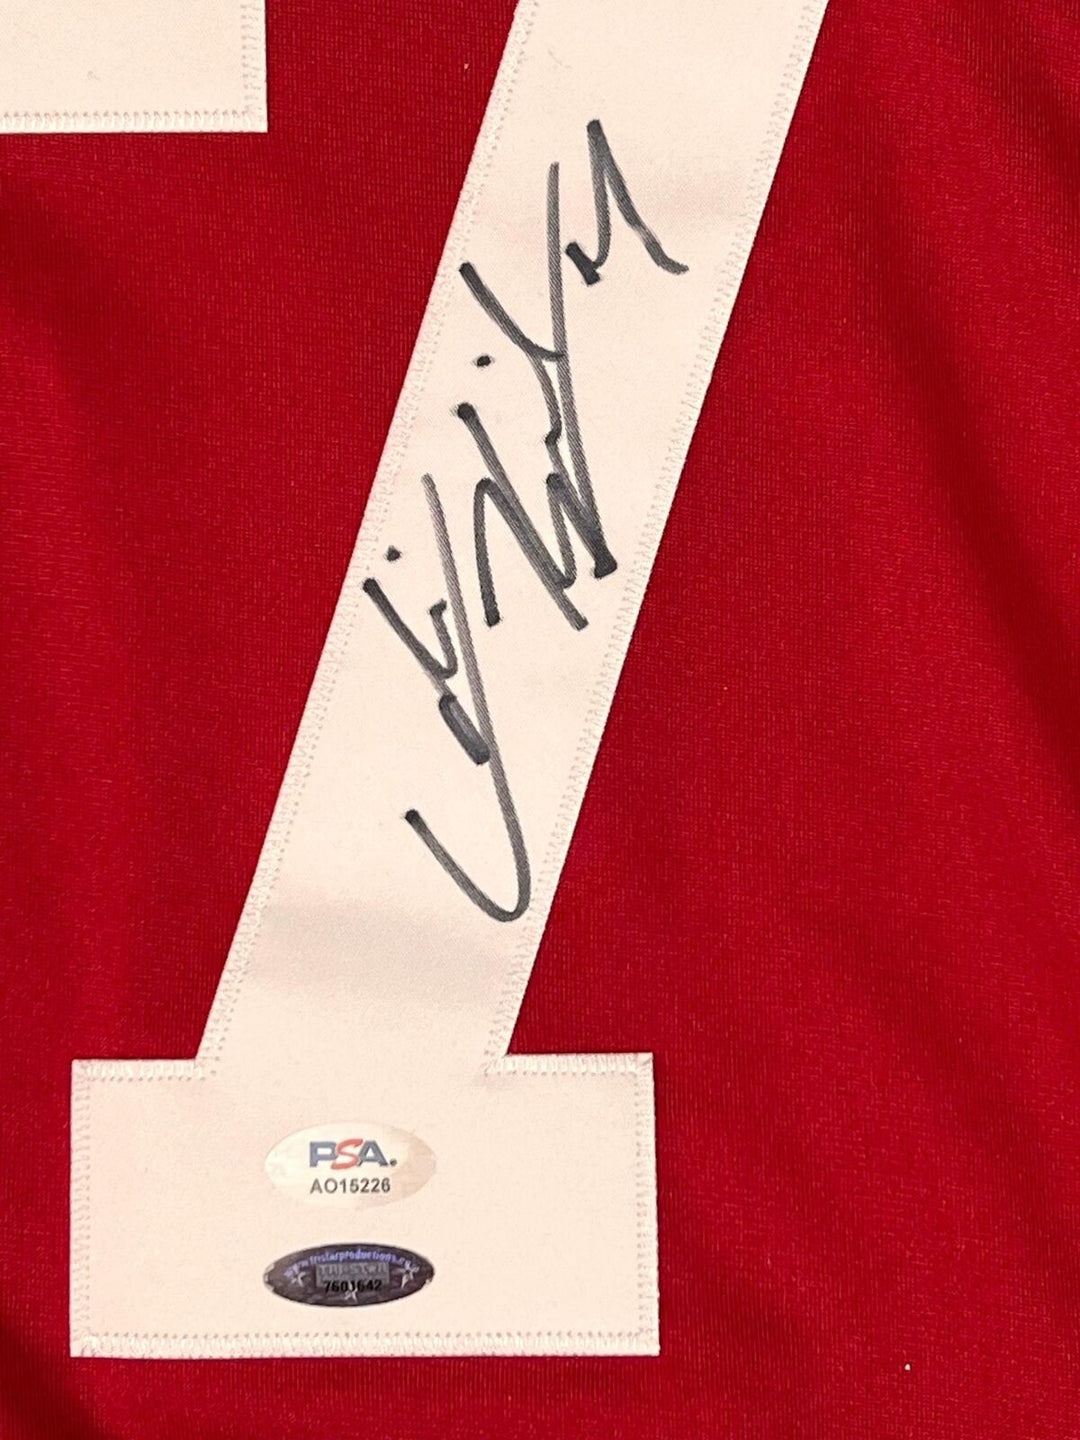 Colin Kaepernick signed jersey PSA/DNA San Francisco 49ers Autographed Image 2